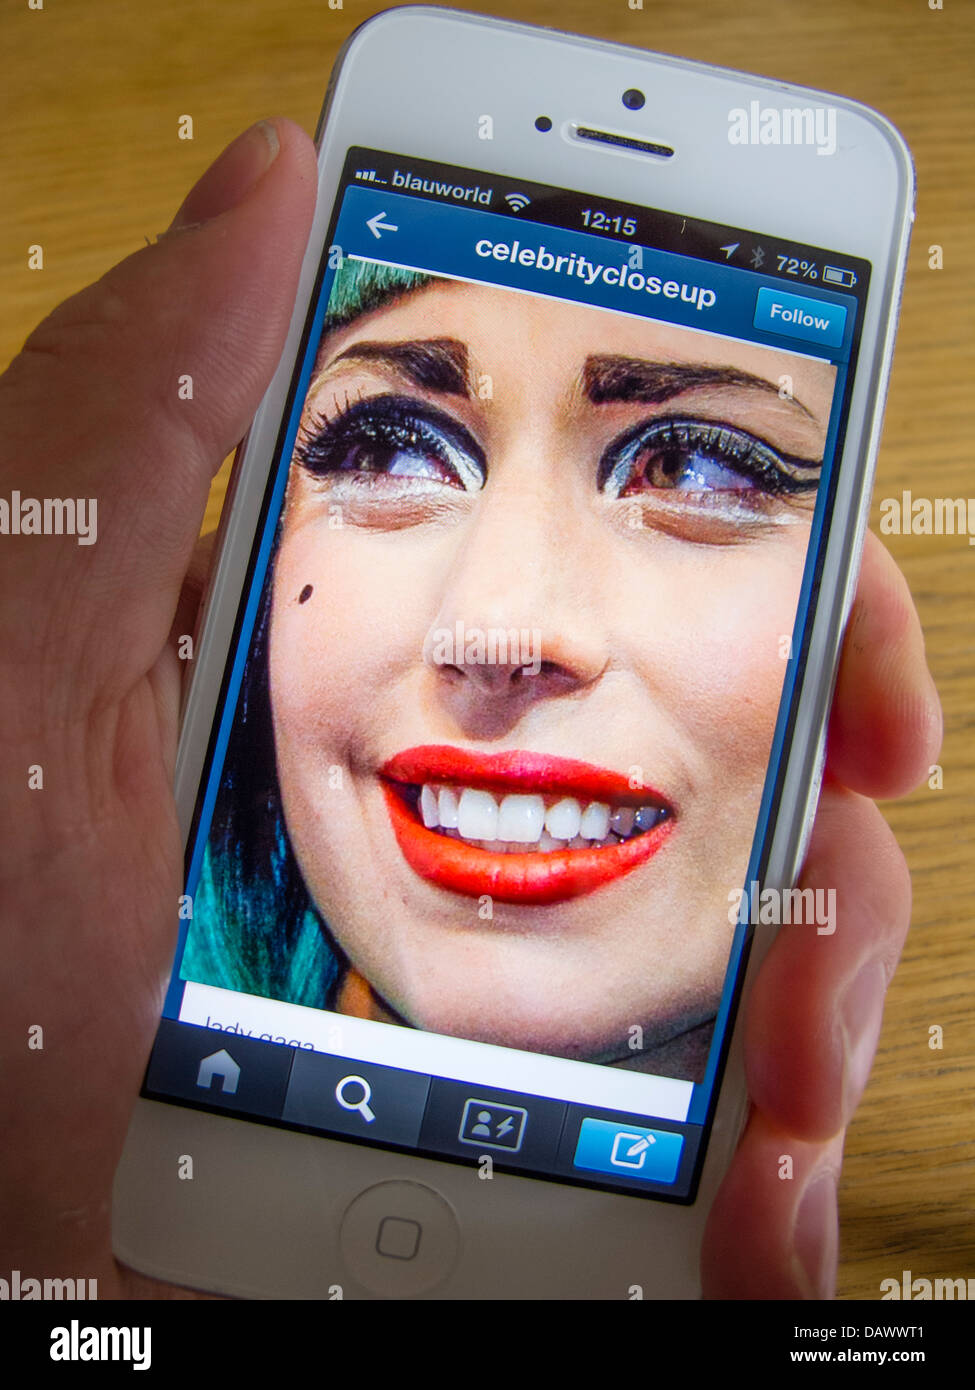 Lady Gaga photograph on Tumblr social media and photosharing app on white iPhone 5 smartphone Stock Photo